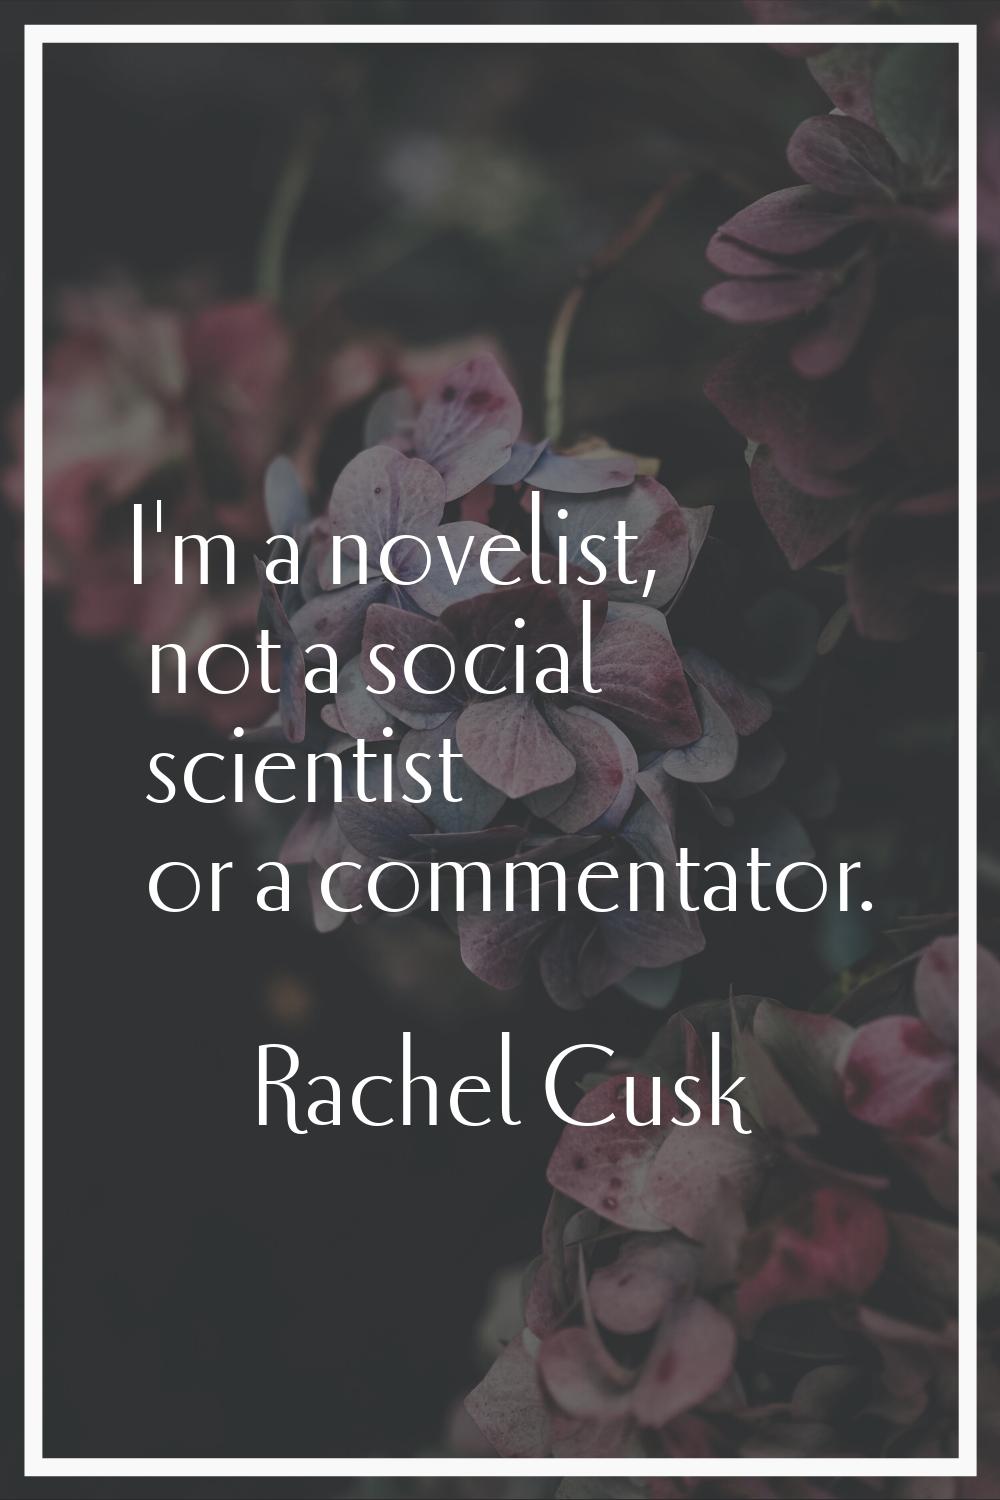 I'm a novelist, not a social scientist or a commentator.